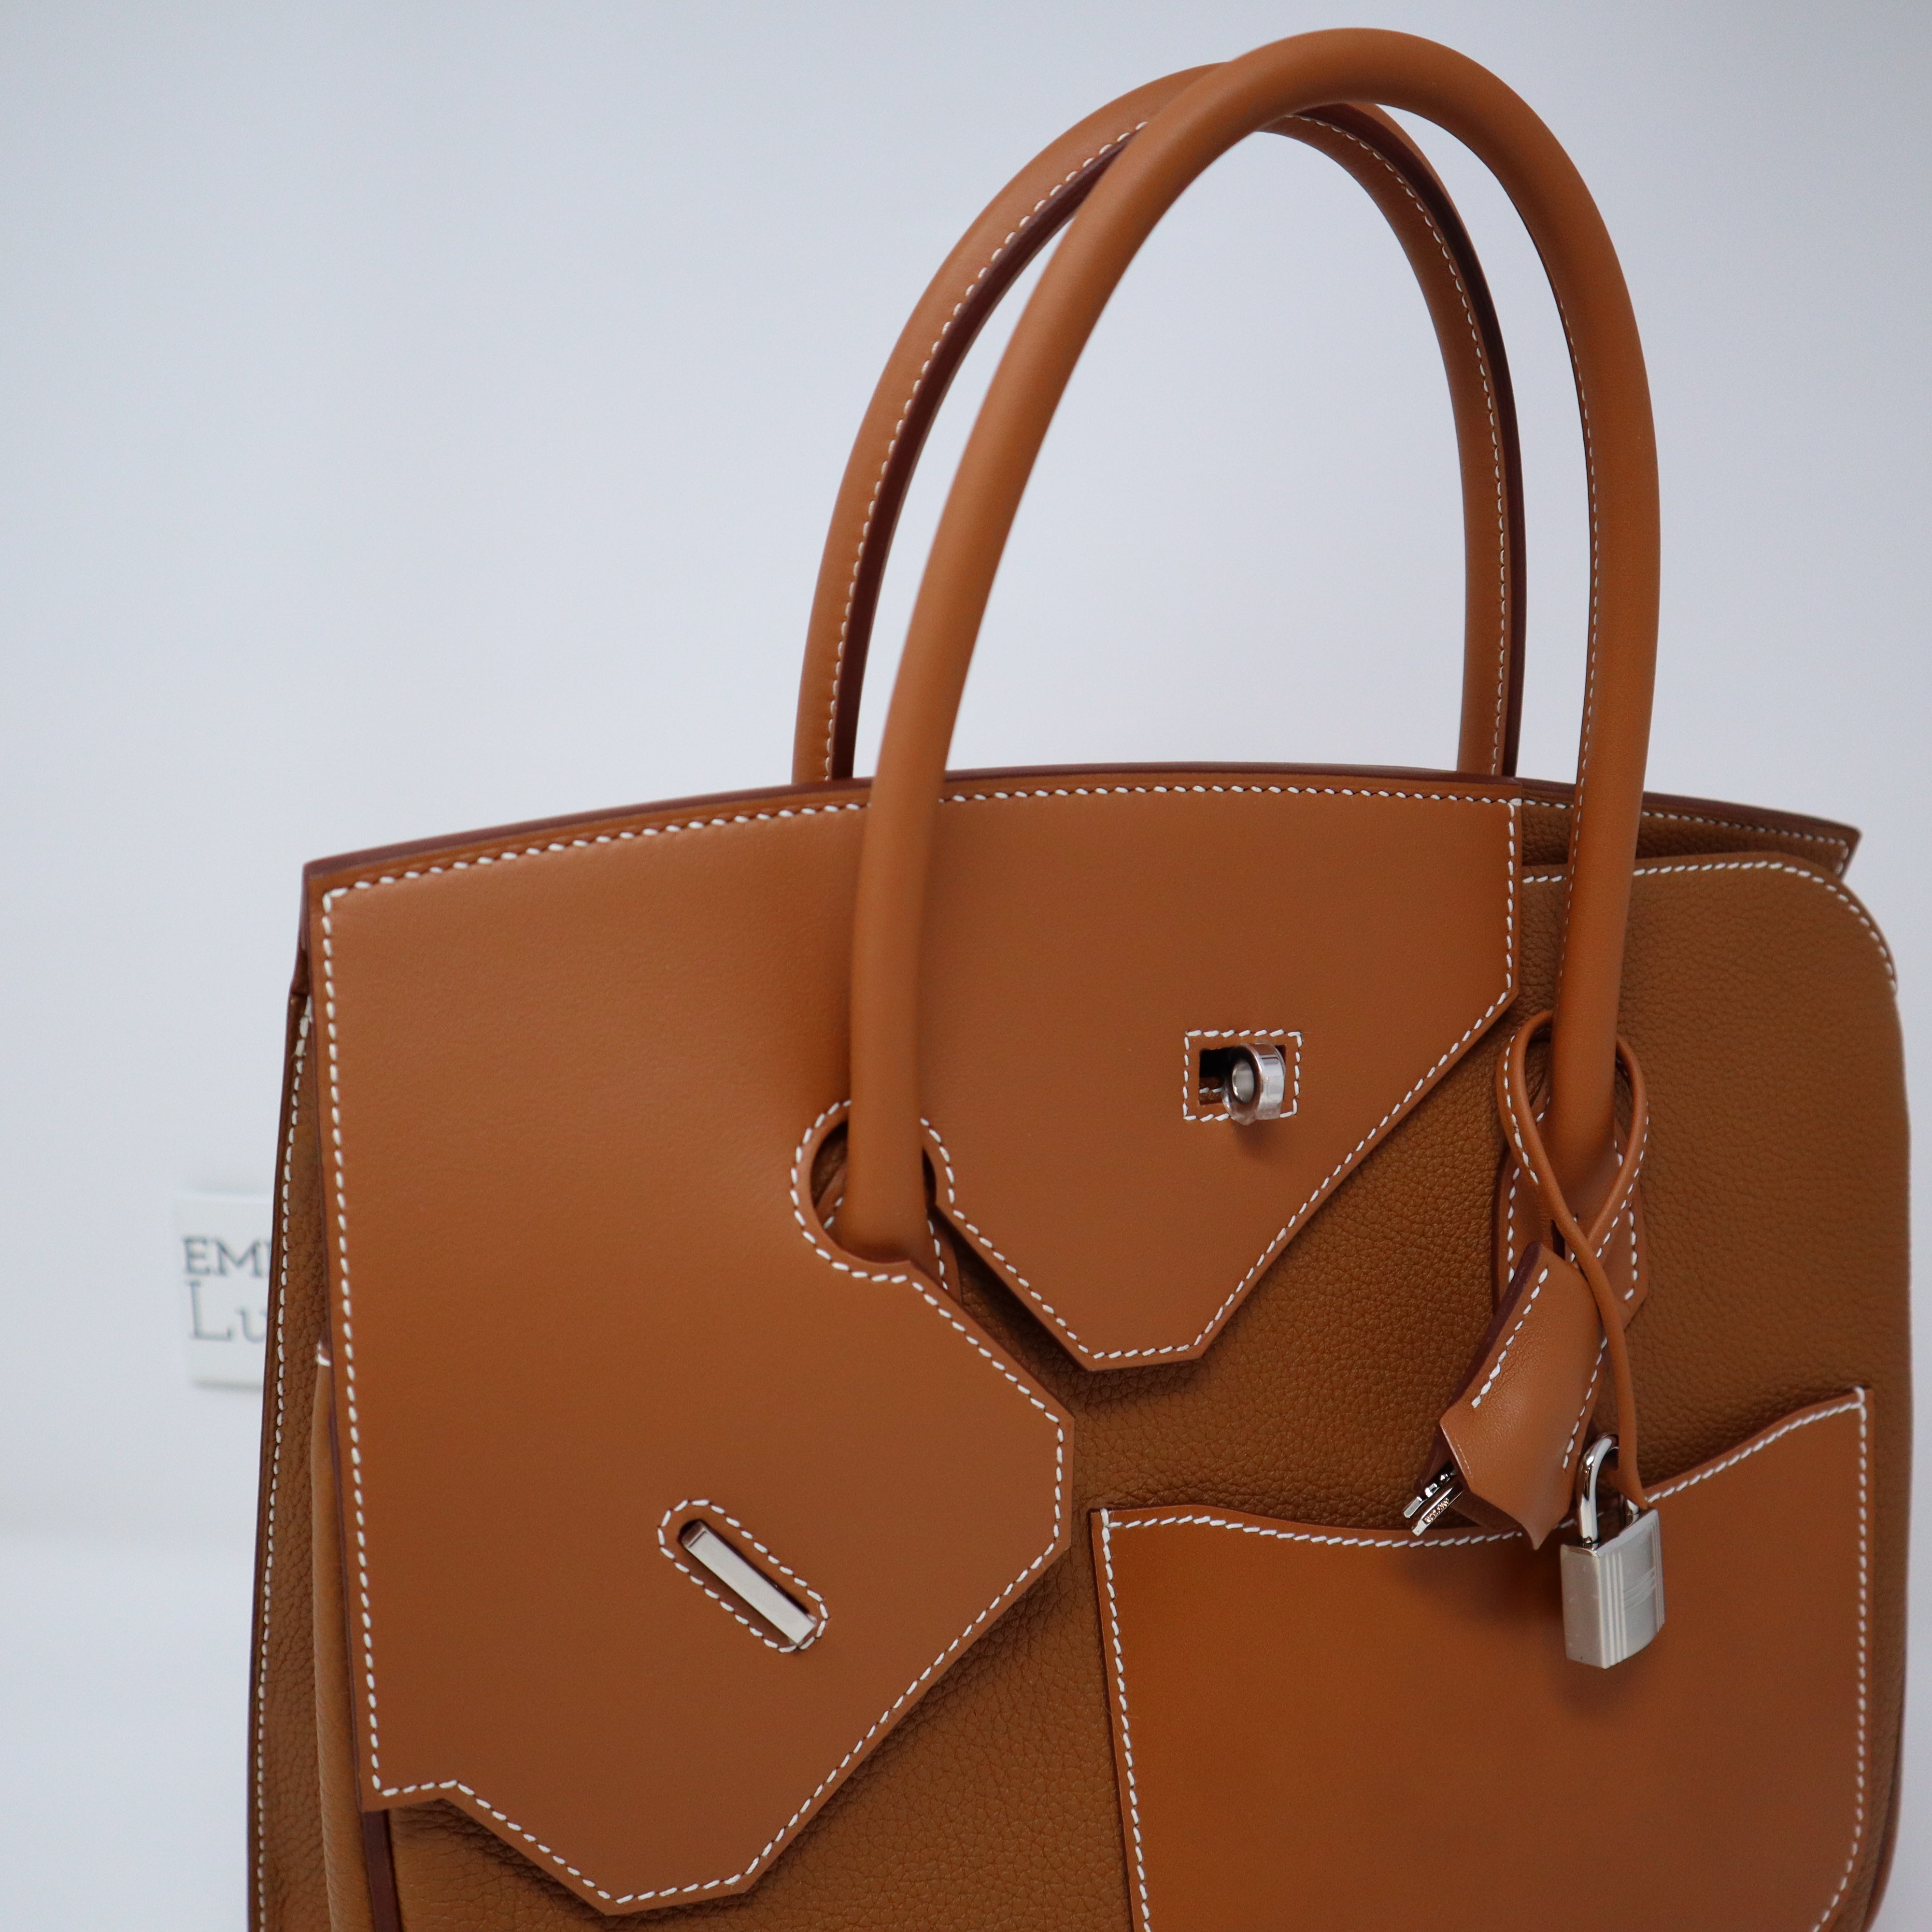 FWRD Renew Hermes Birkin 25 Togo Handbag in Black & Rose Gold